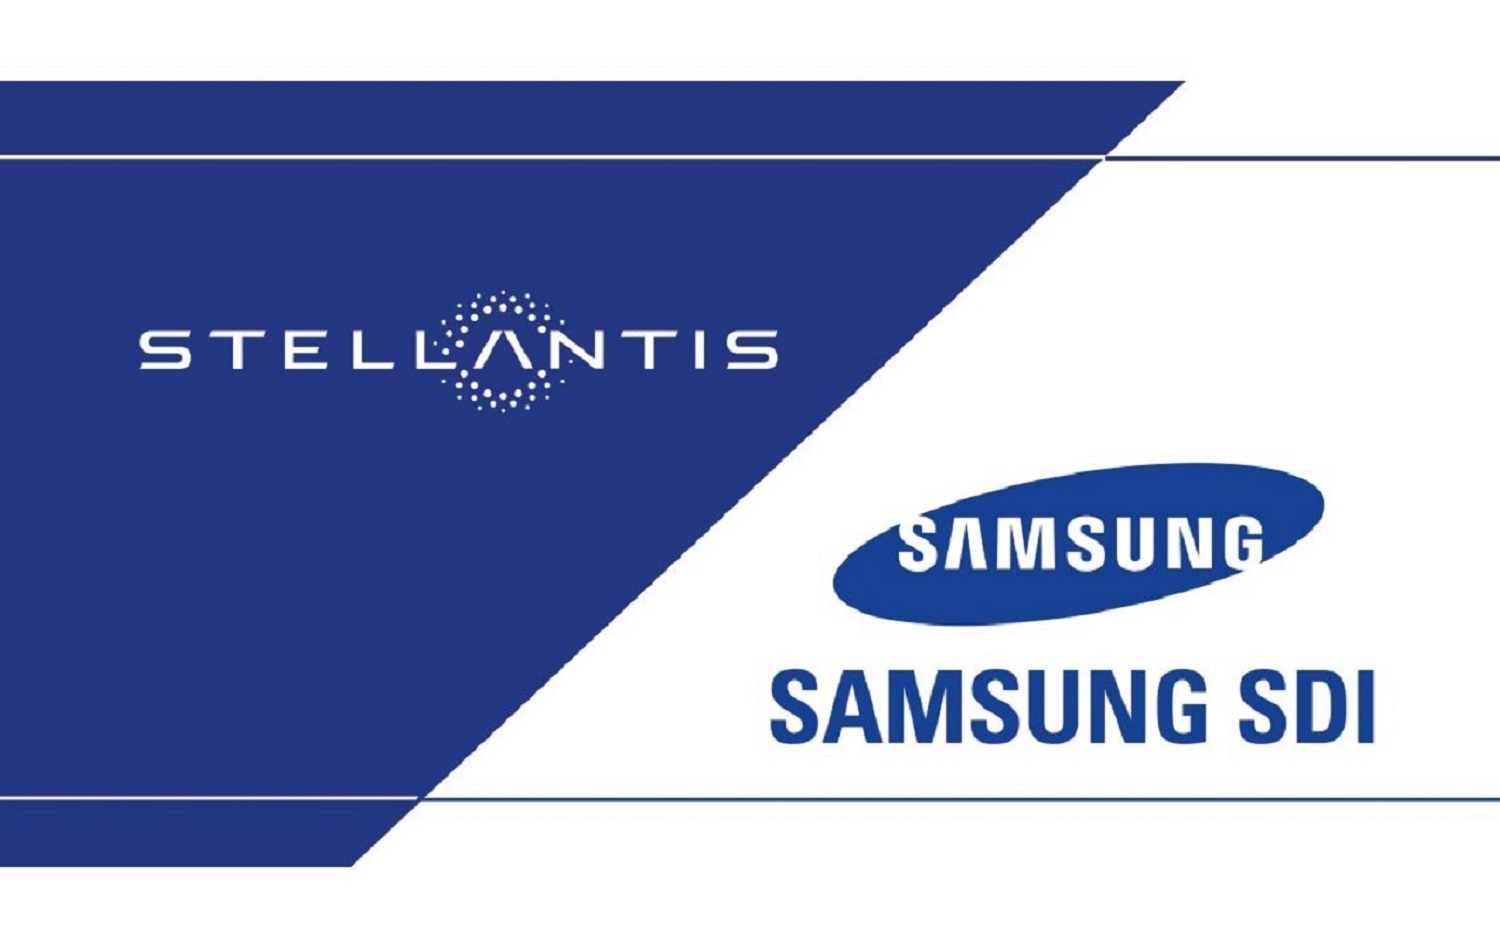 Stellantis e Samsung